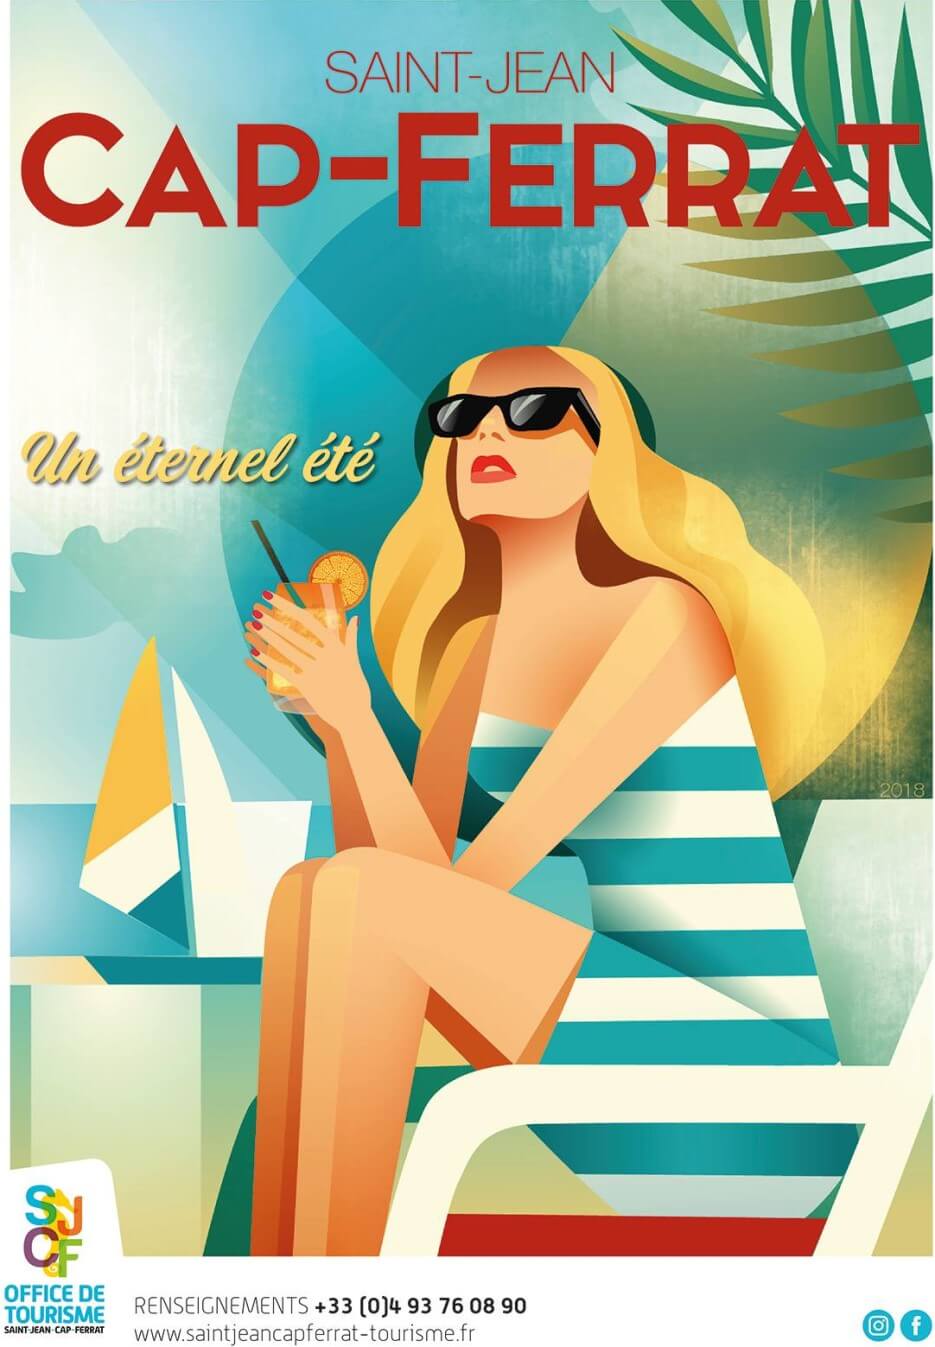 Saint-Jean-Cap-Ferrat poster of woman on beach